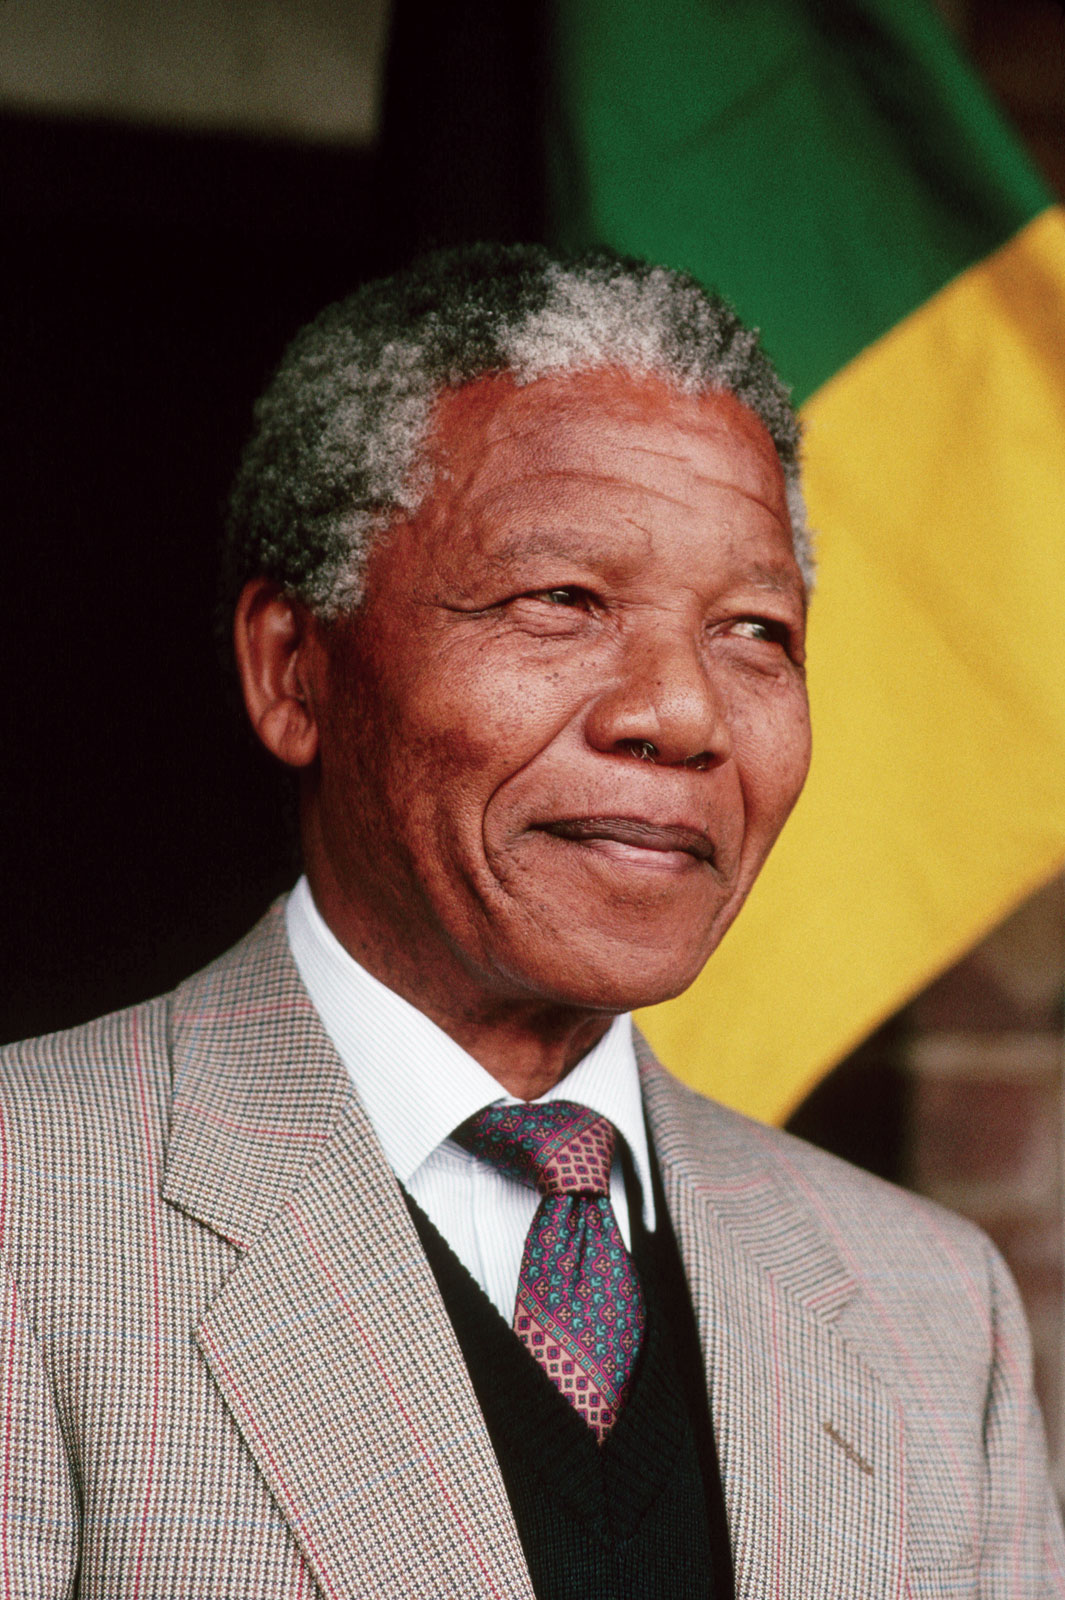 Nelson Mandela “Our deepest fear”